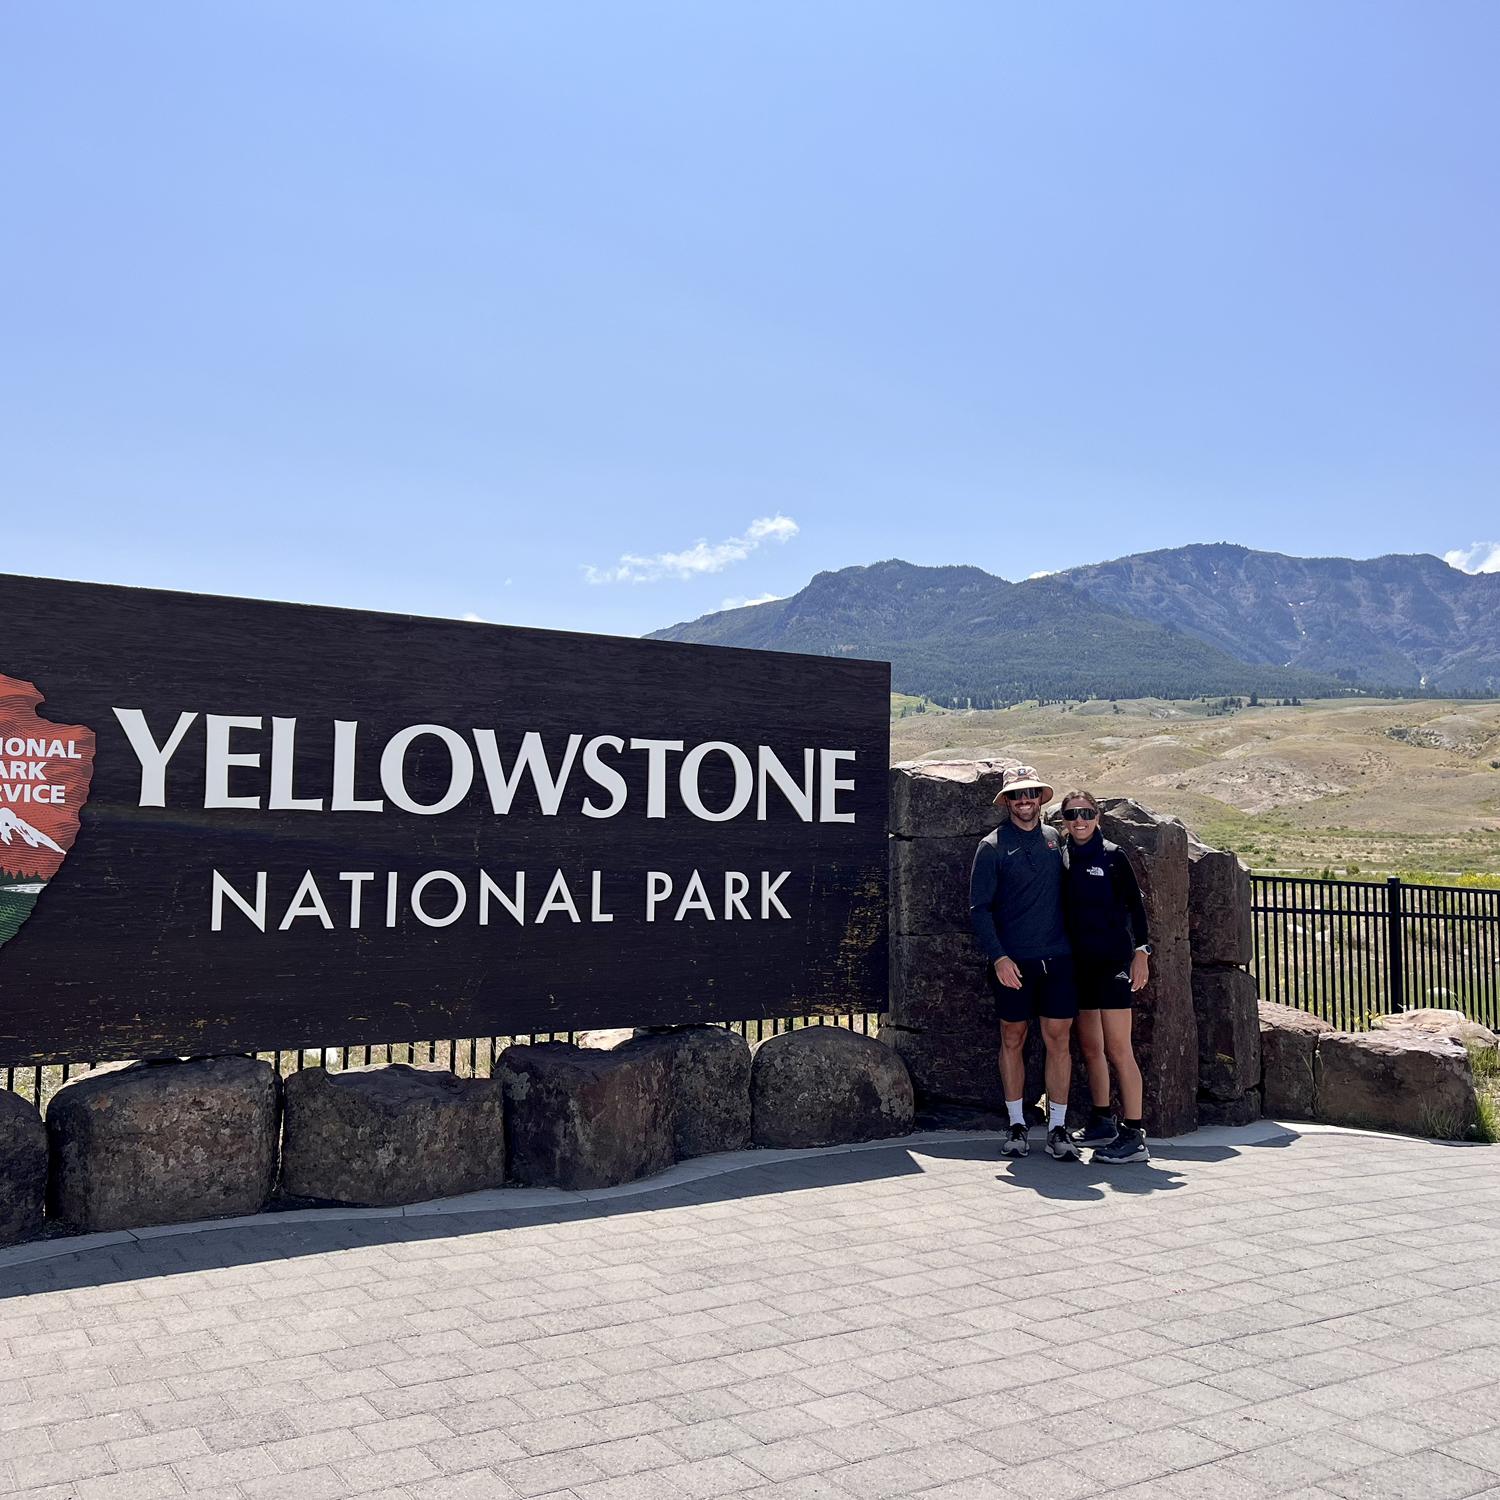 Yellowstone National Park!